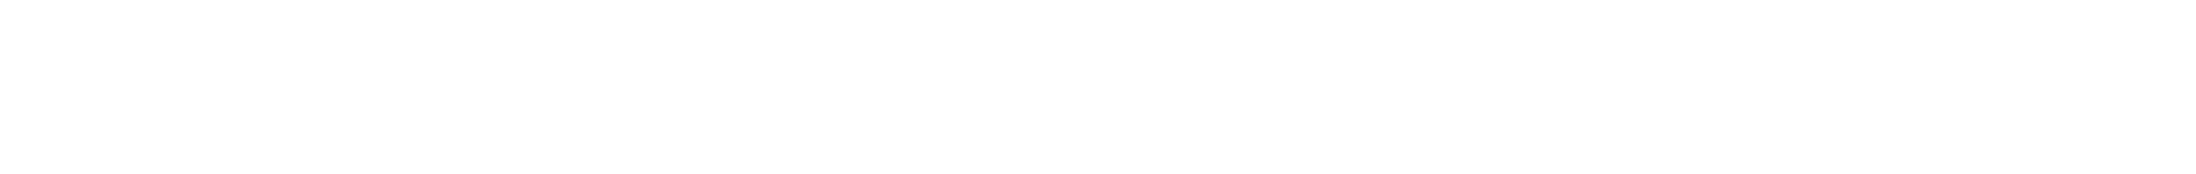 INNNOMAXINVESTMENTS logo v1.1 white